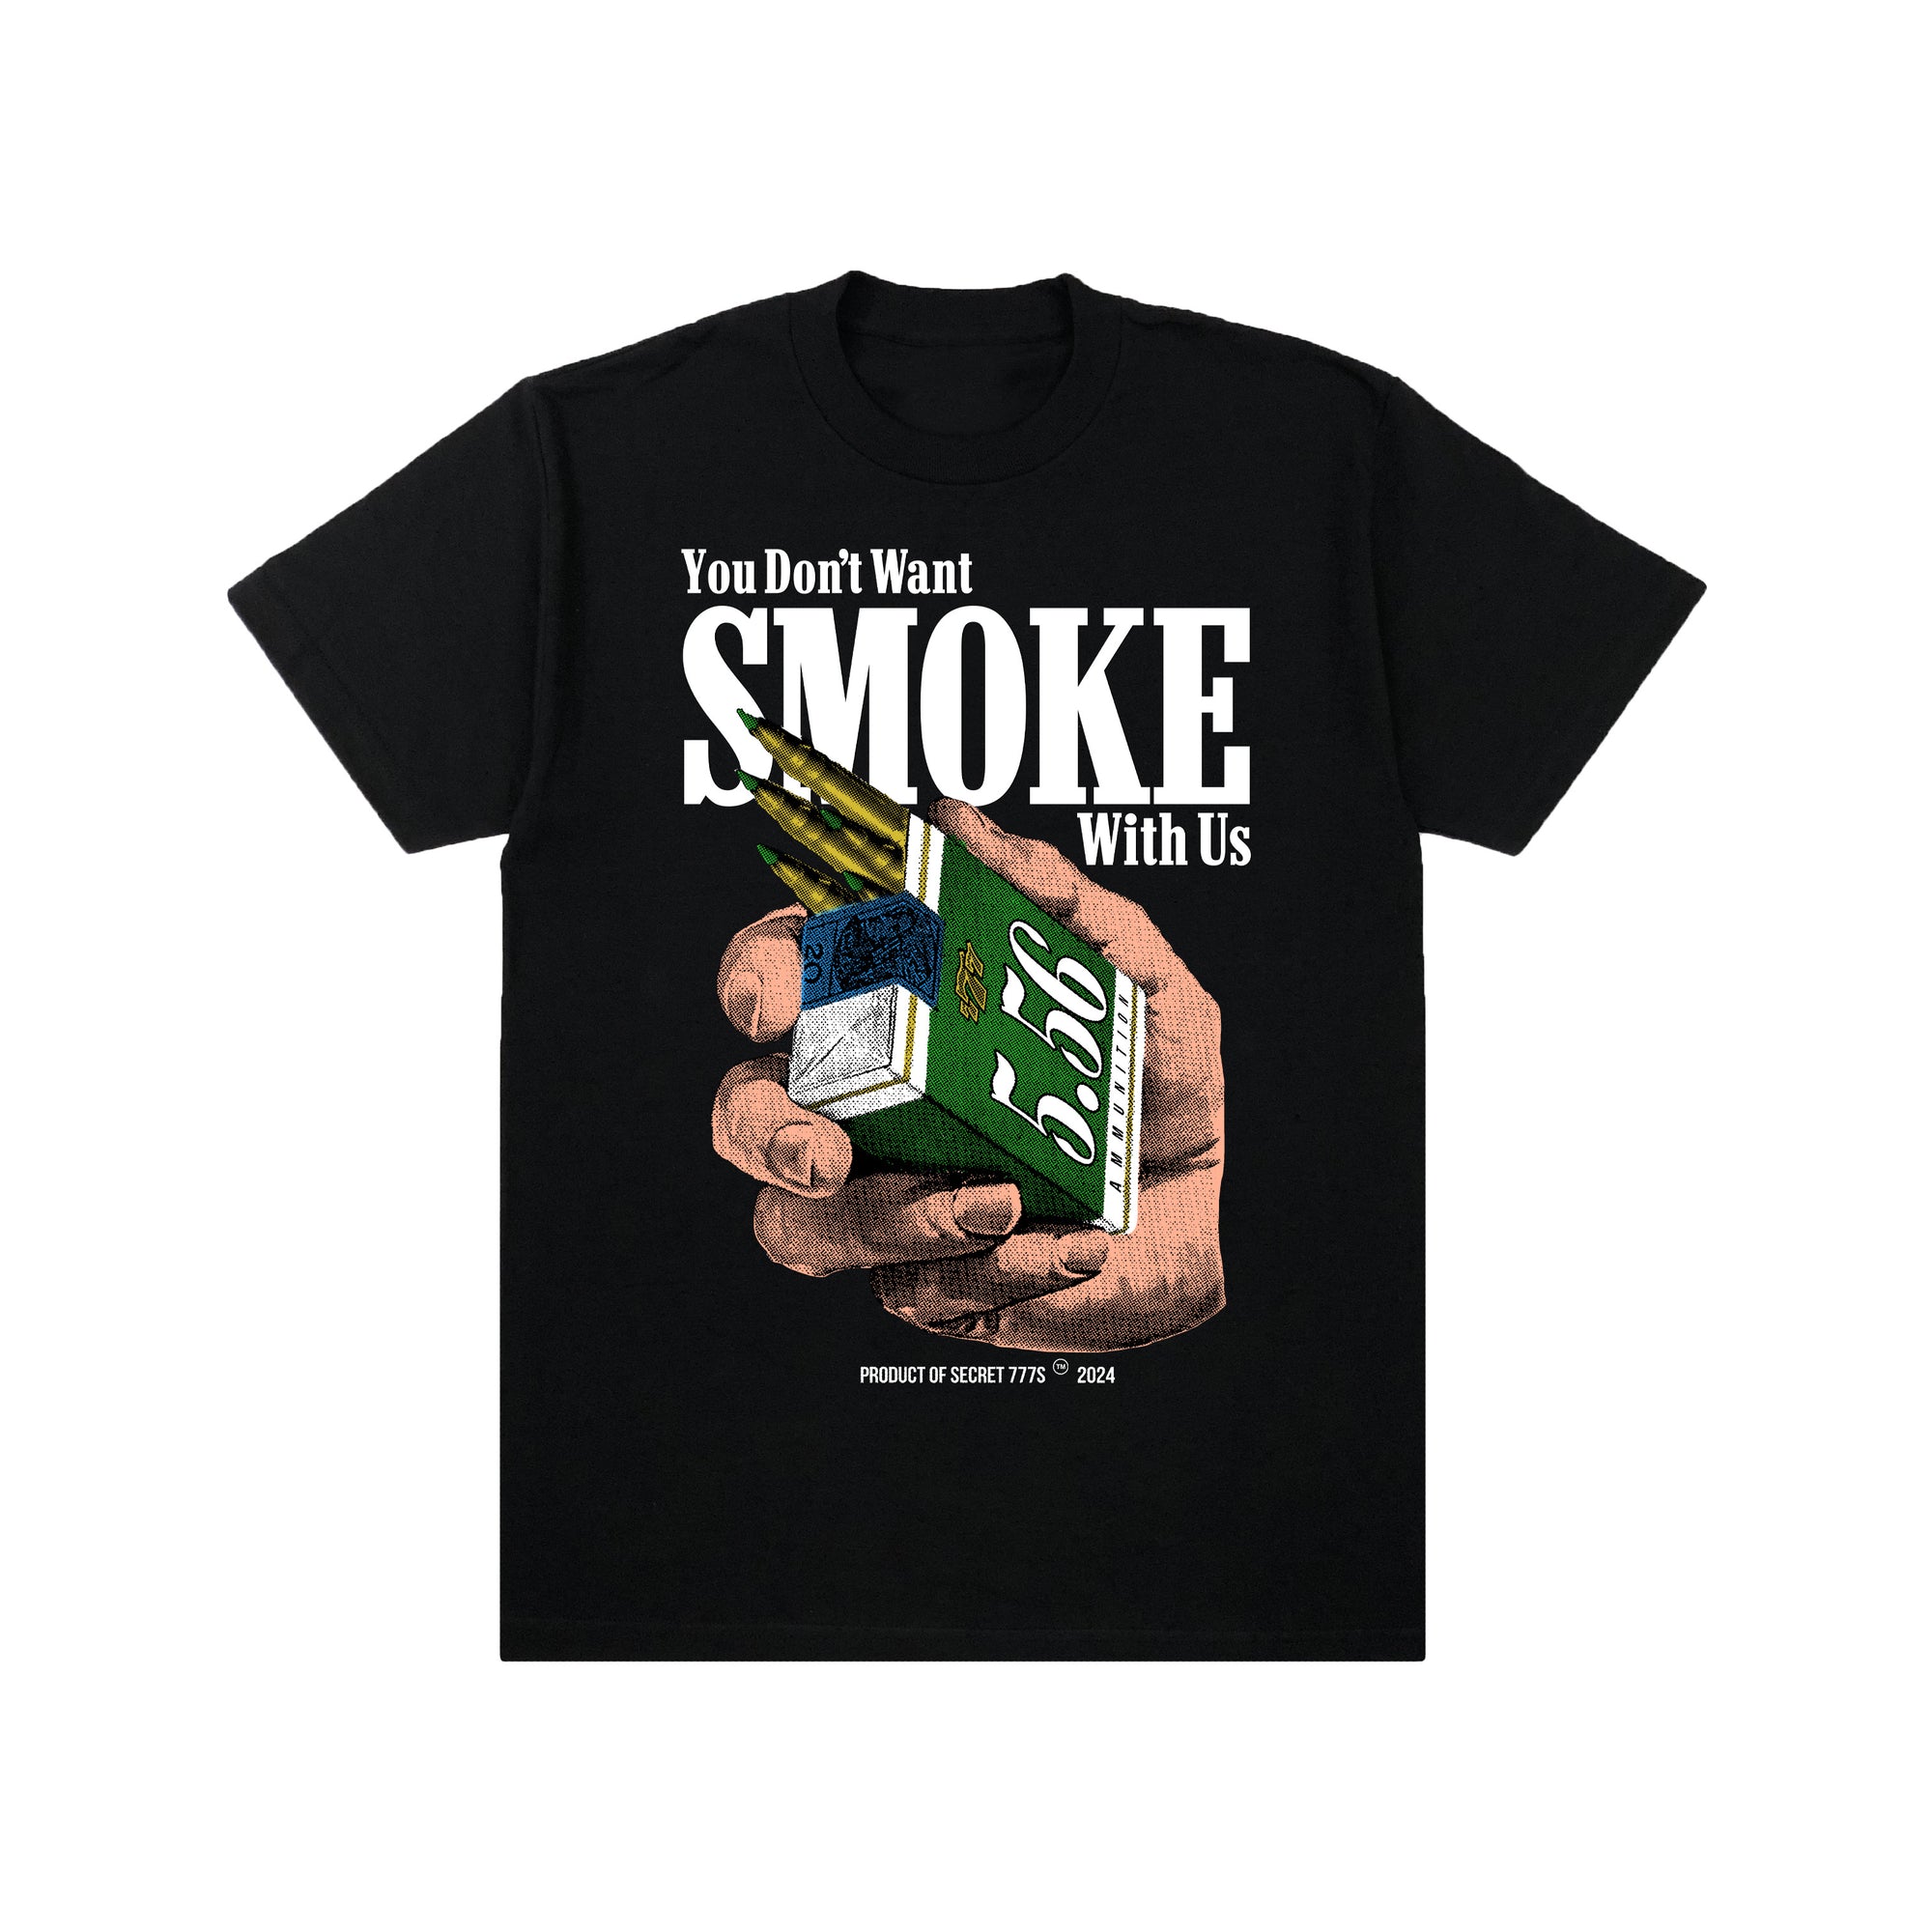 You Don't Want Smoke! (Black Tee)